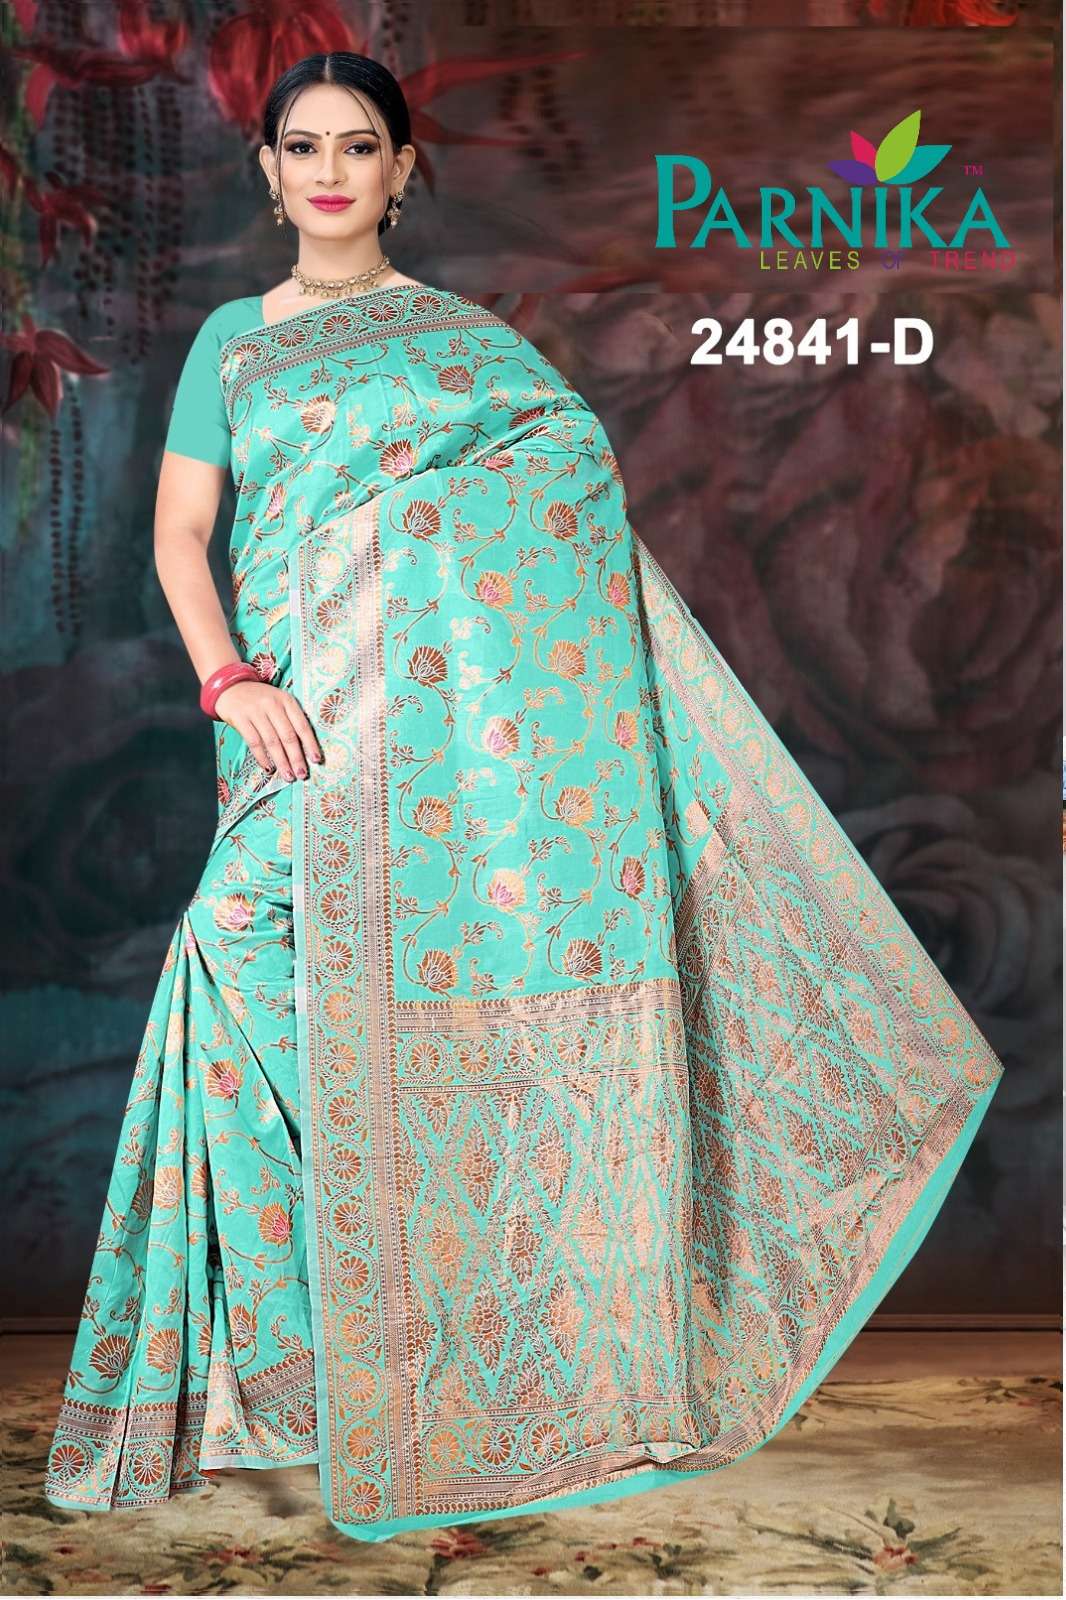 Parnika India Silk Sarees Festive Wear Wedding Saree in Wholesale rate -- 24841